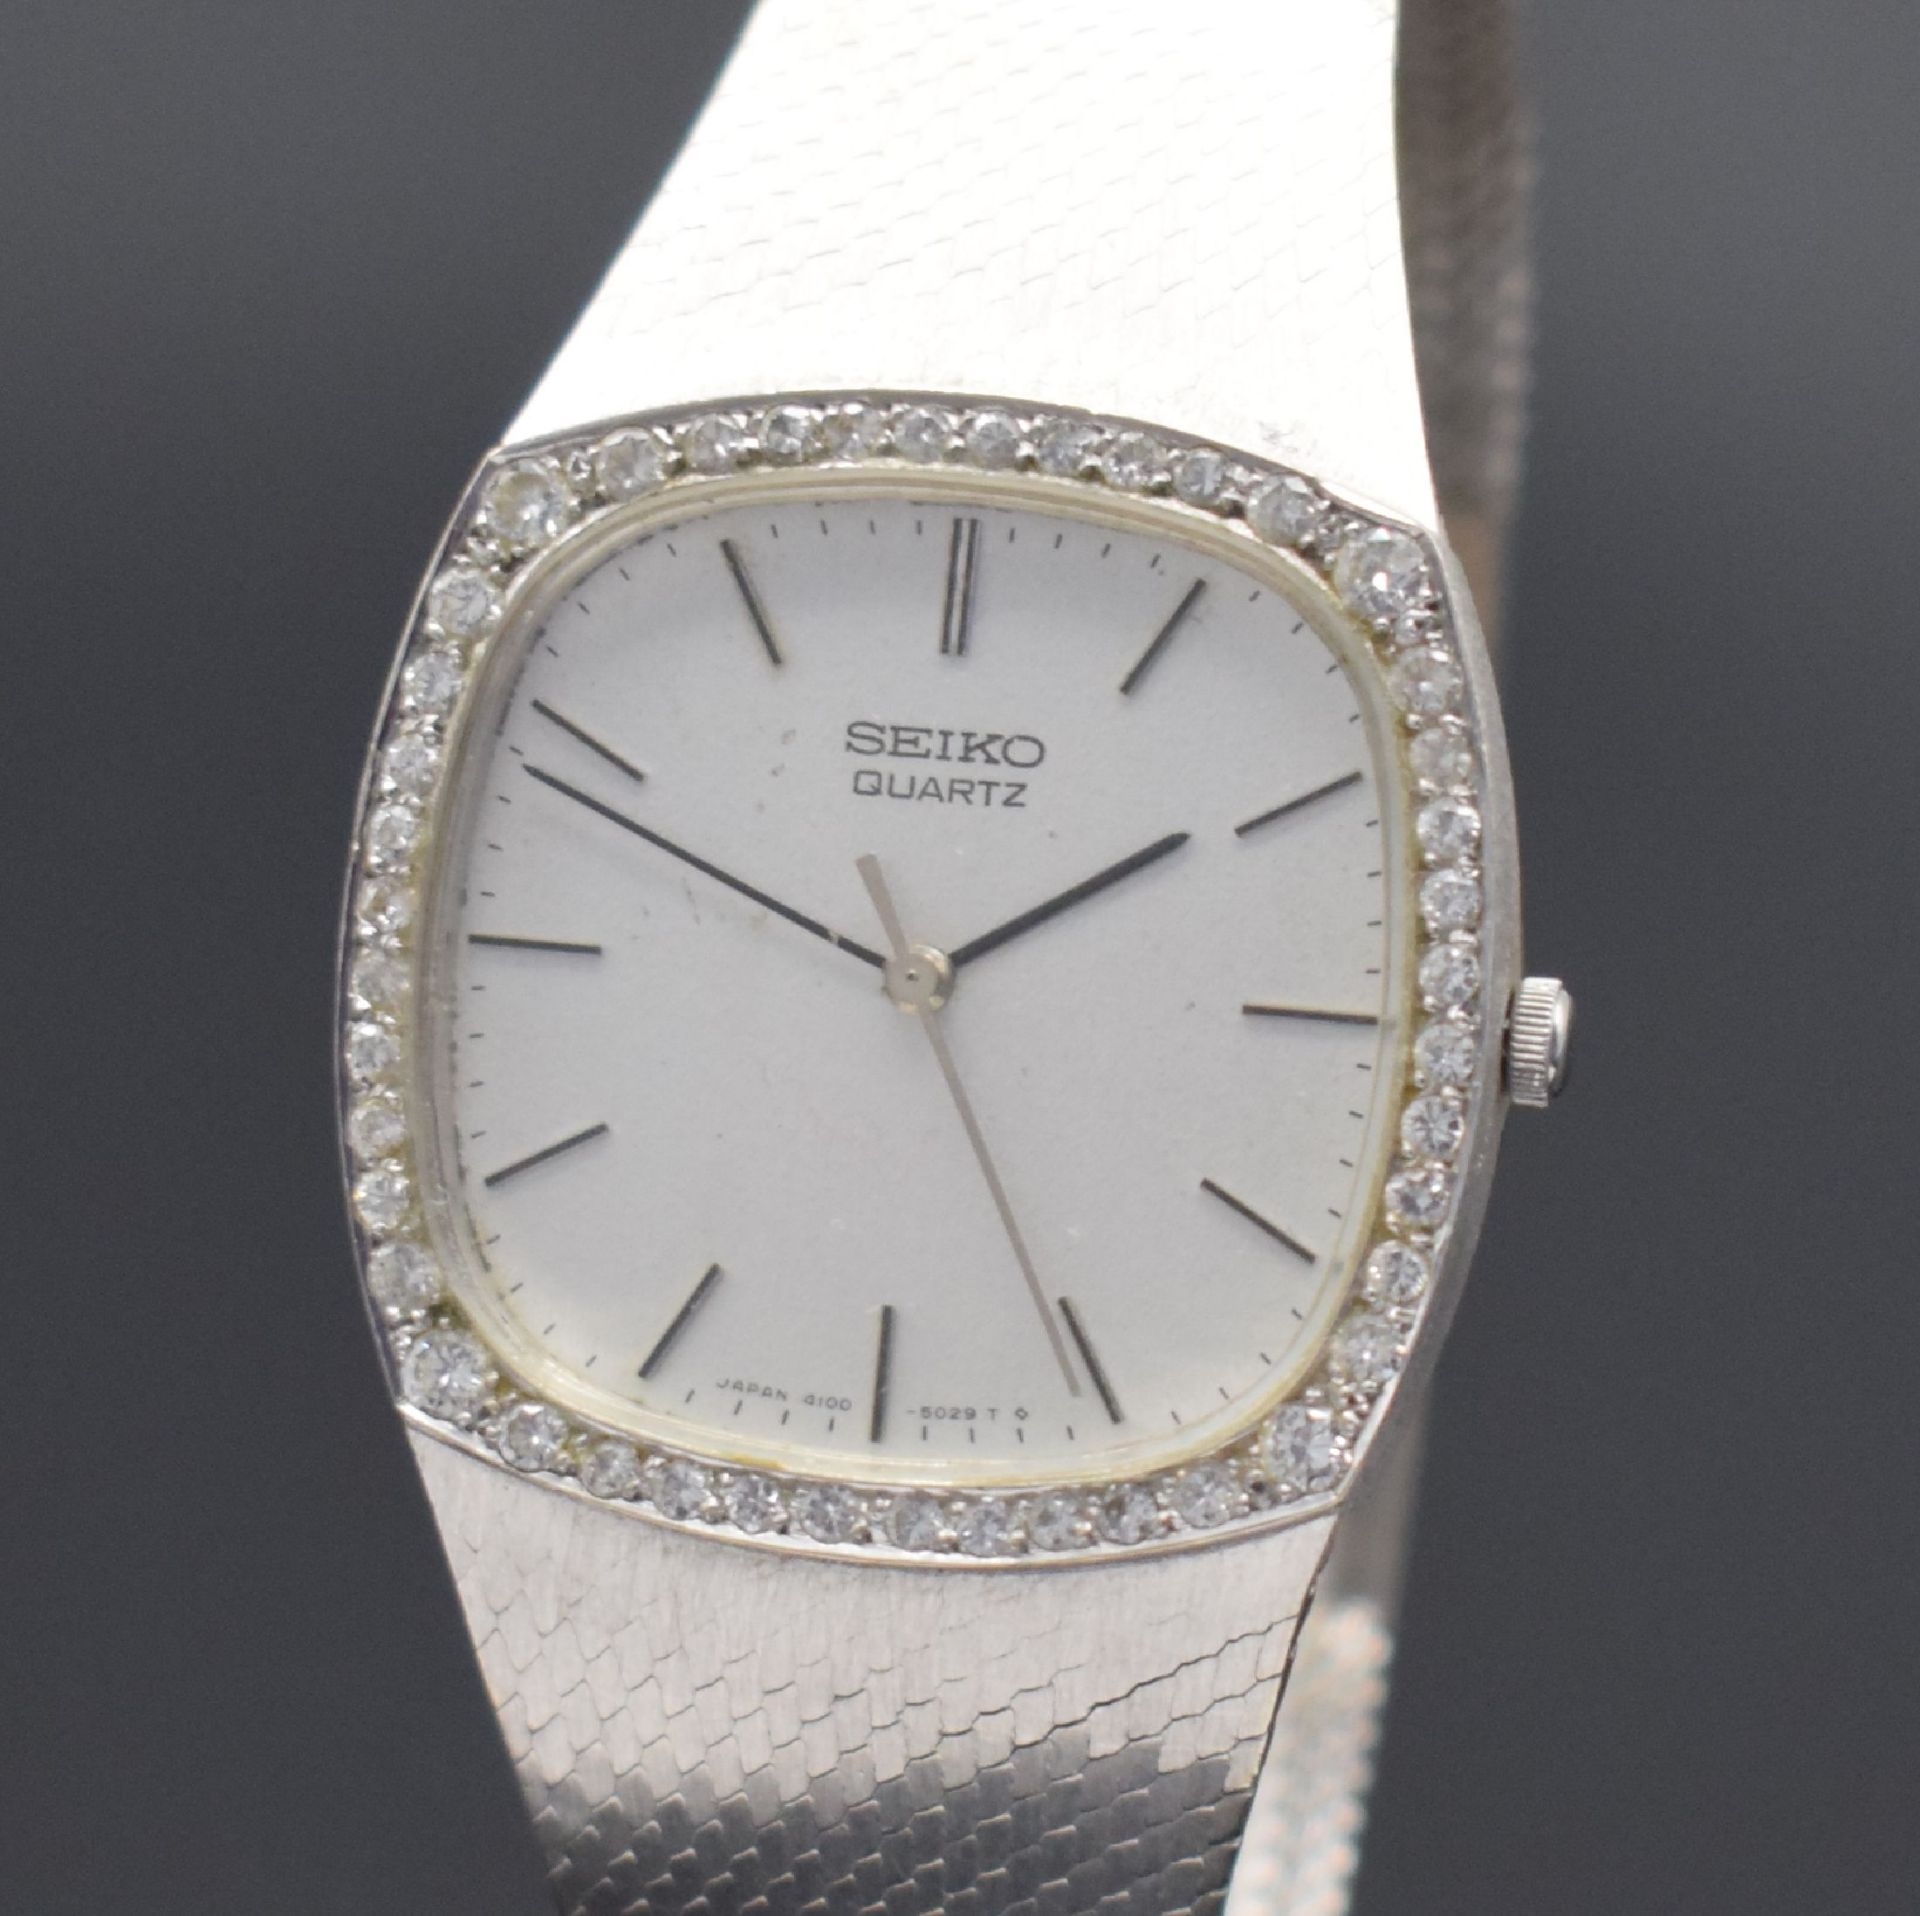 SEIKO Armbanduhr in WG 585/000, Japan 1970er Jahre, - Bild 2 aus 4